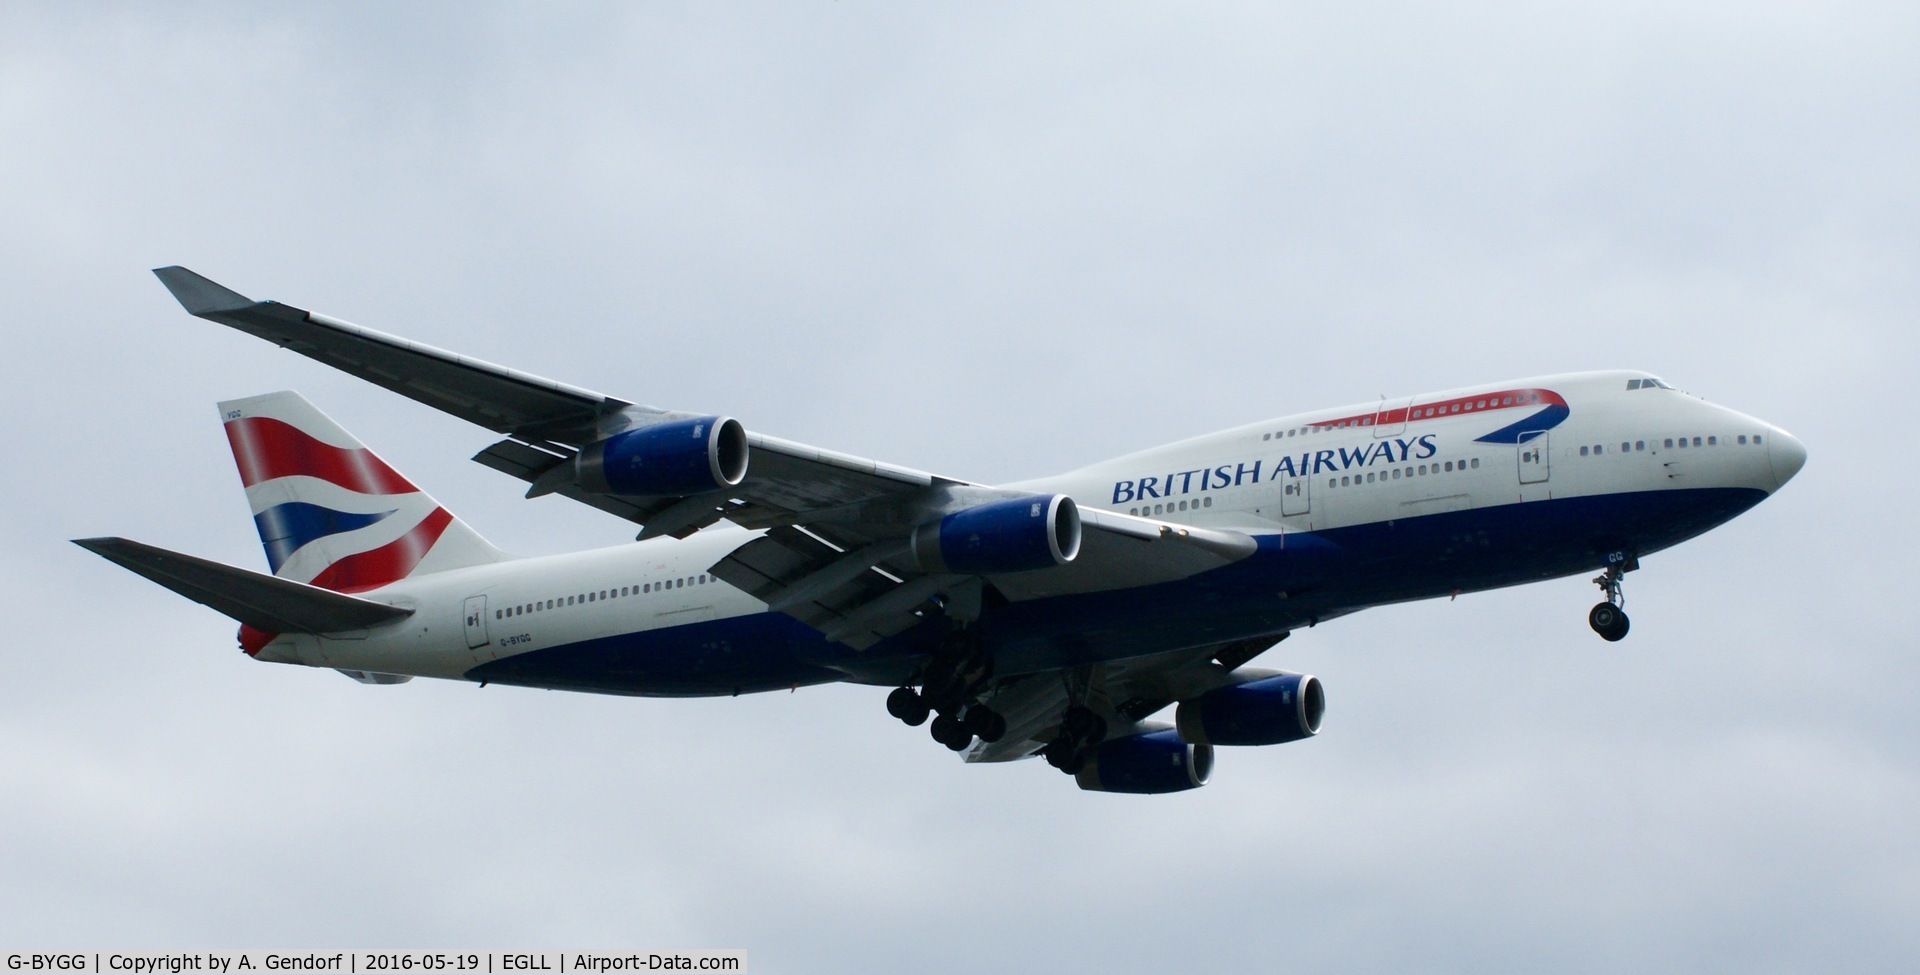 G-BYGG, 1999 Boeing 747-436 C/N 28859, British Airways, seen here landing at London Heathrow(EGLL)